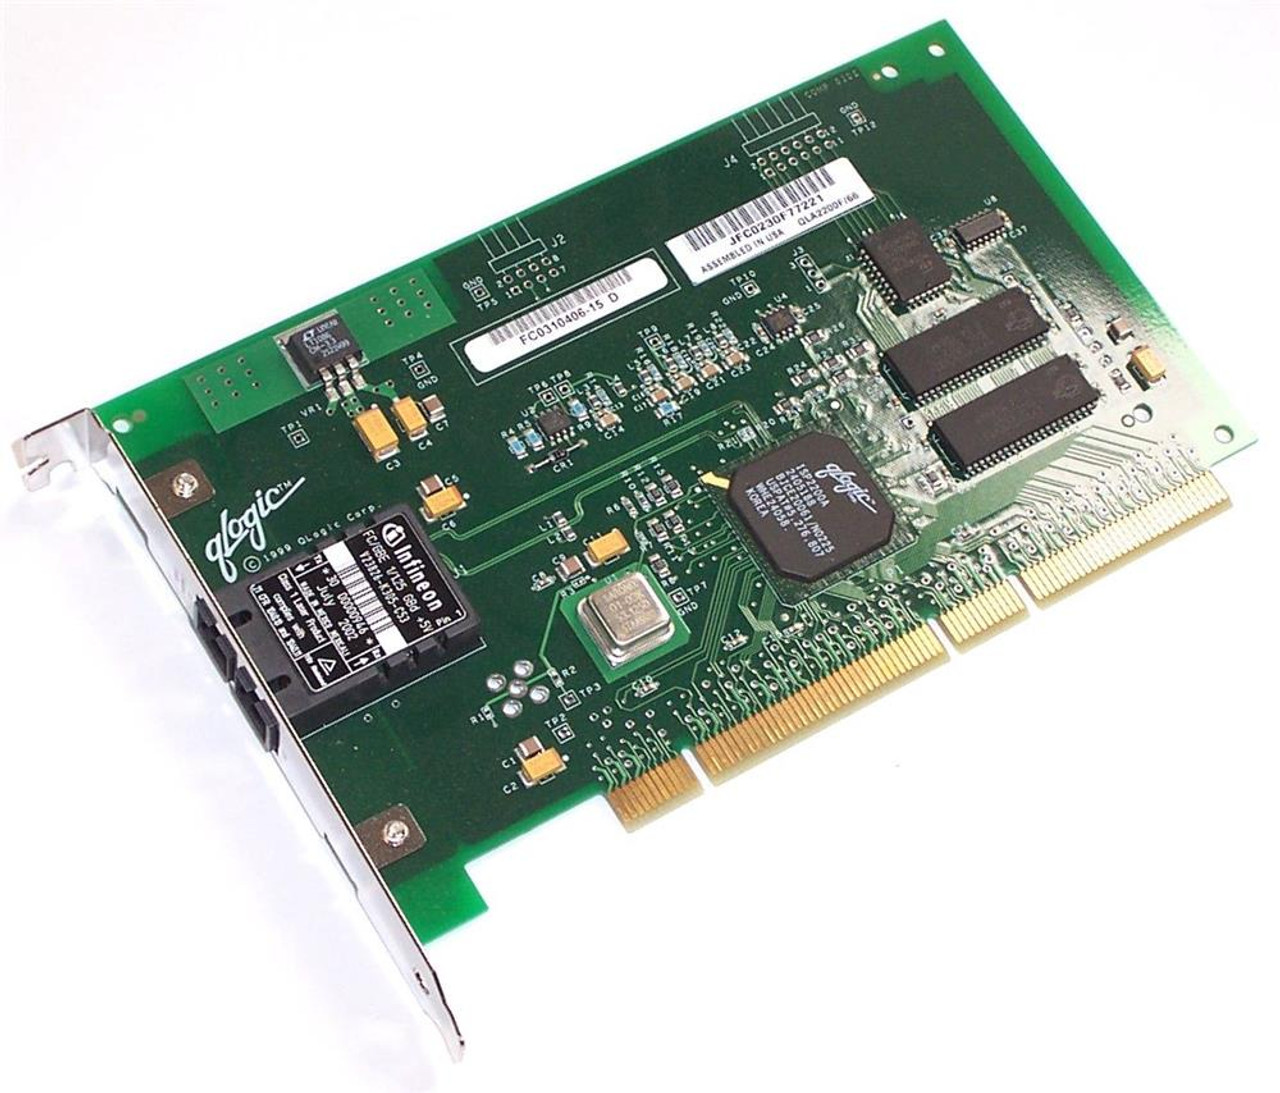 FC0310406 QLogic 1GB PCI Fibre Channel Host Bus Adapter